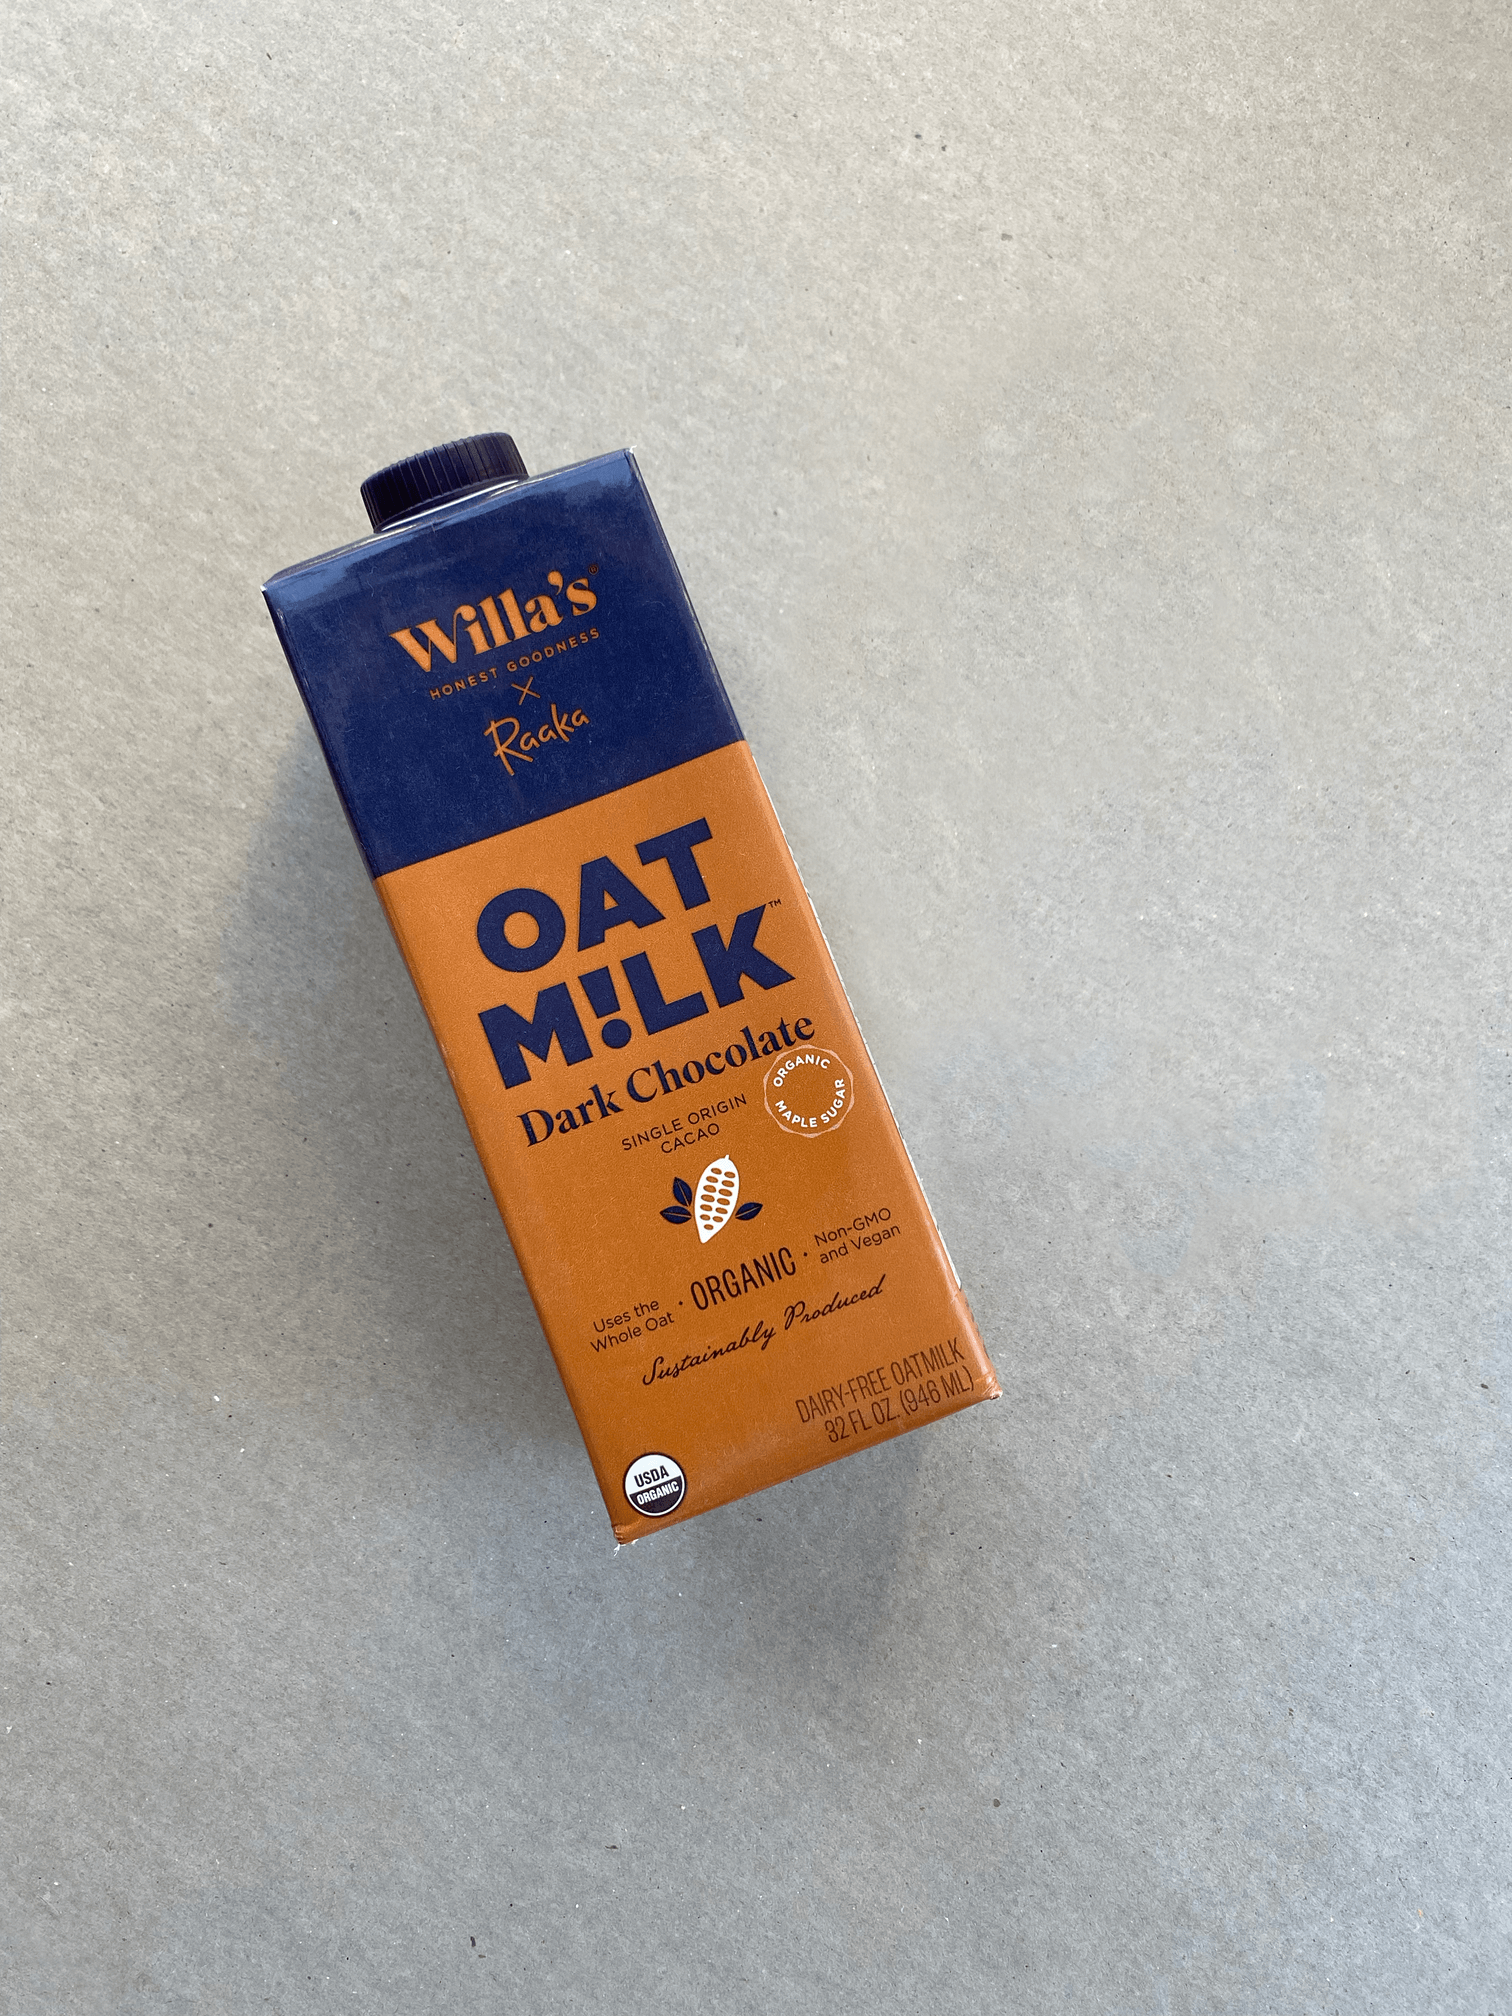 willas chocolate oat milk